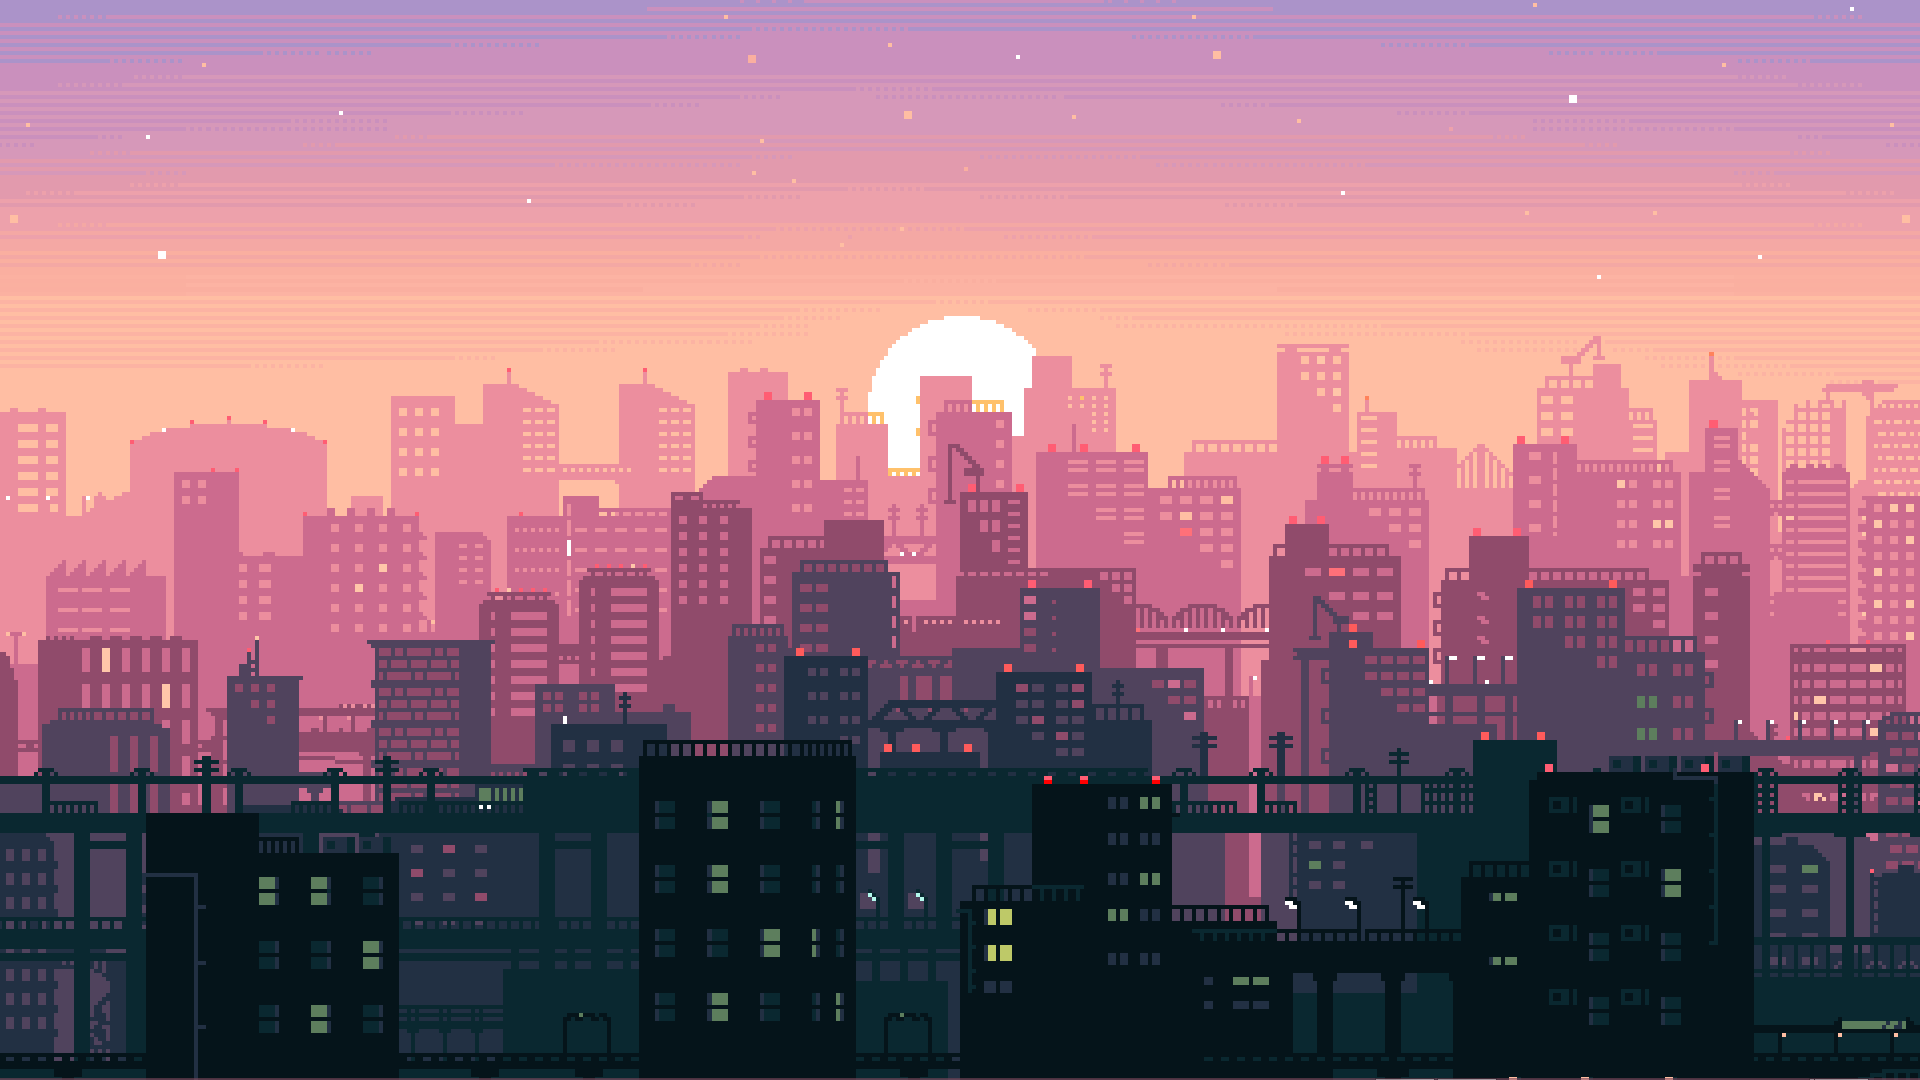 Pixel art cityscape with a sunset sky - Desktop